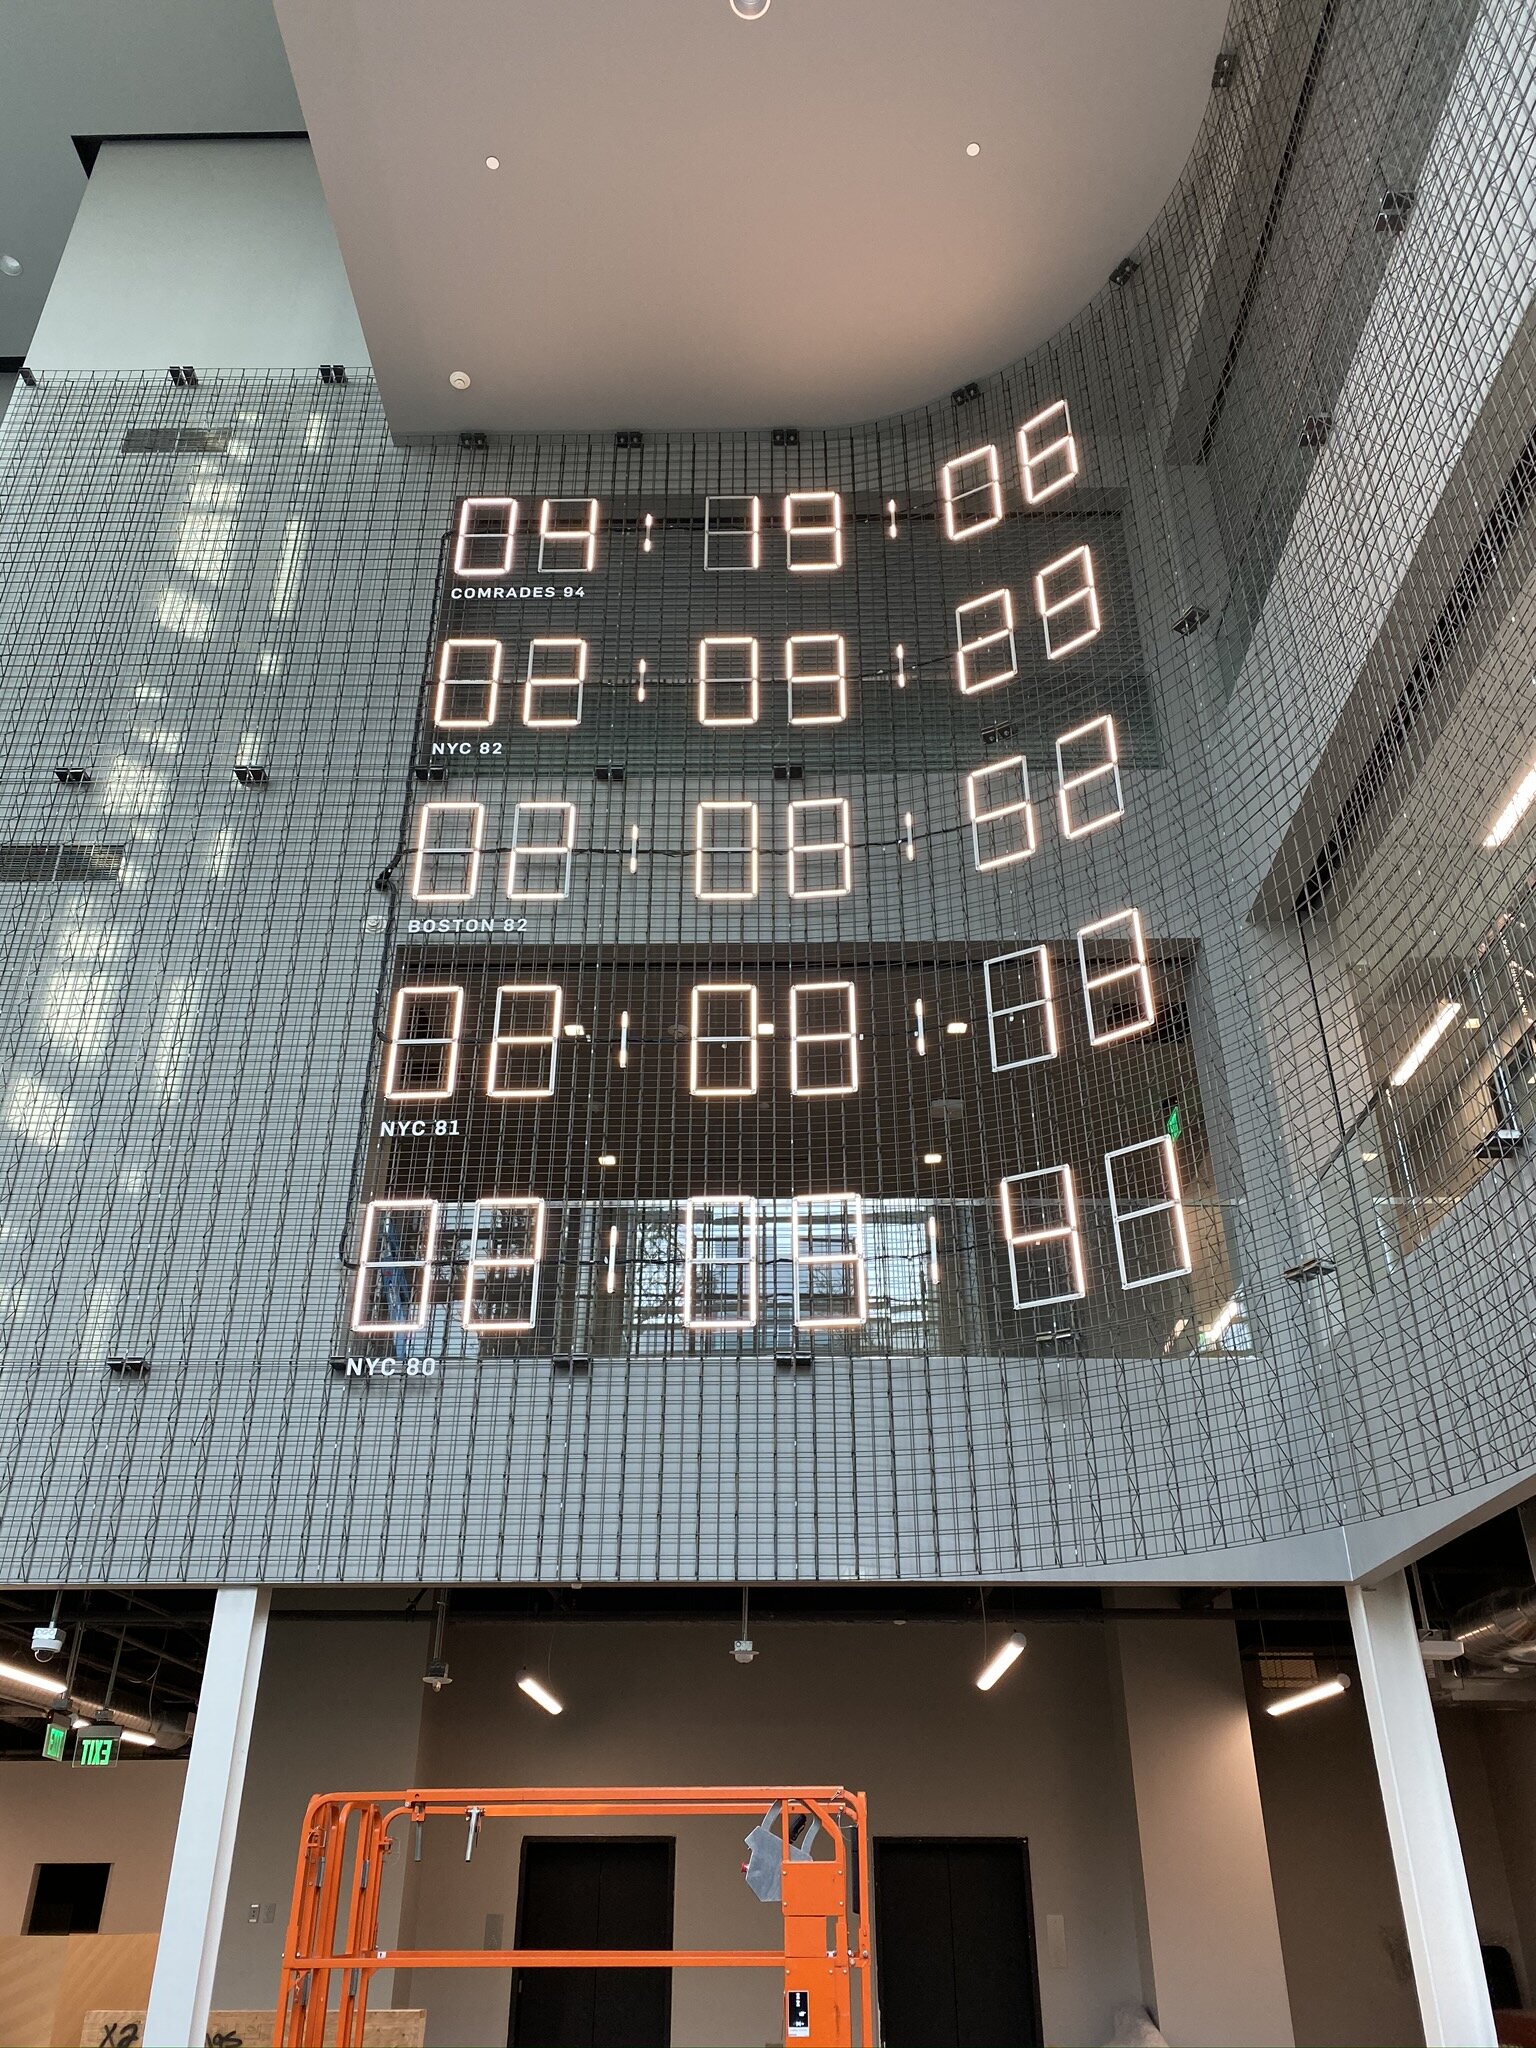 Marathon Clocks Daytime with Lift.JPEG